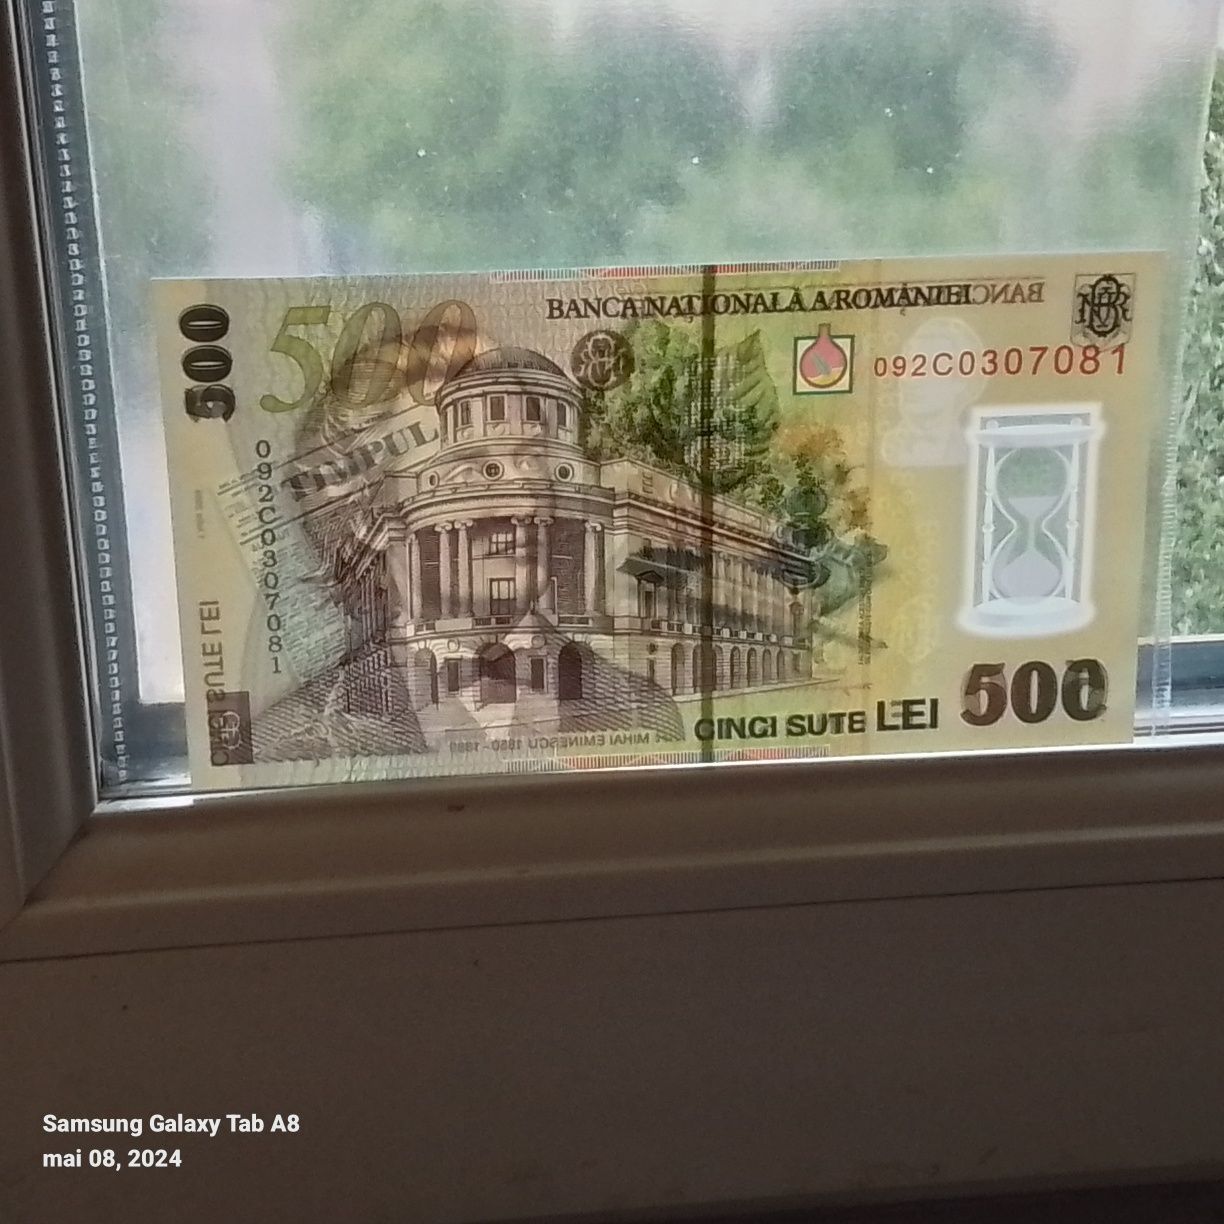 Bancnota 500 lei an 2005 - Mihai Eminescu.